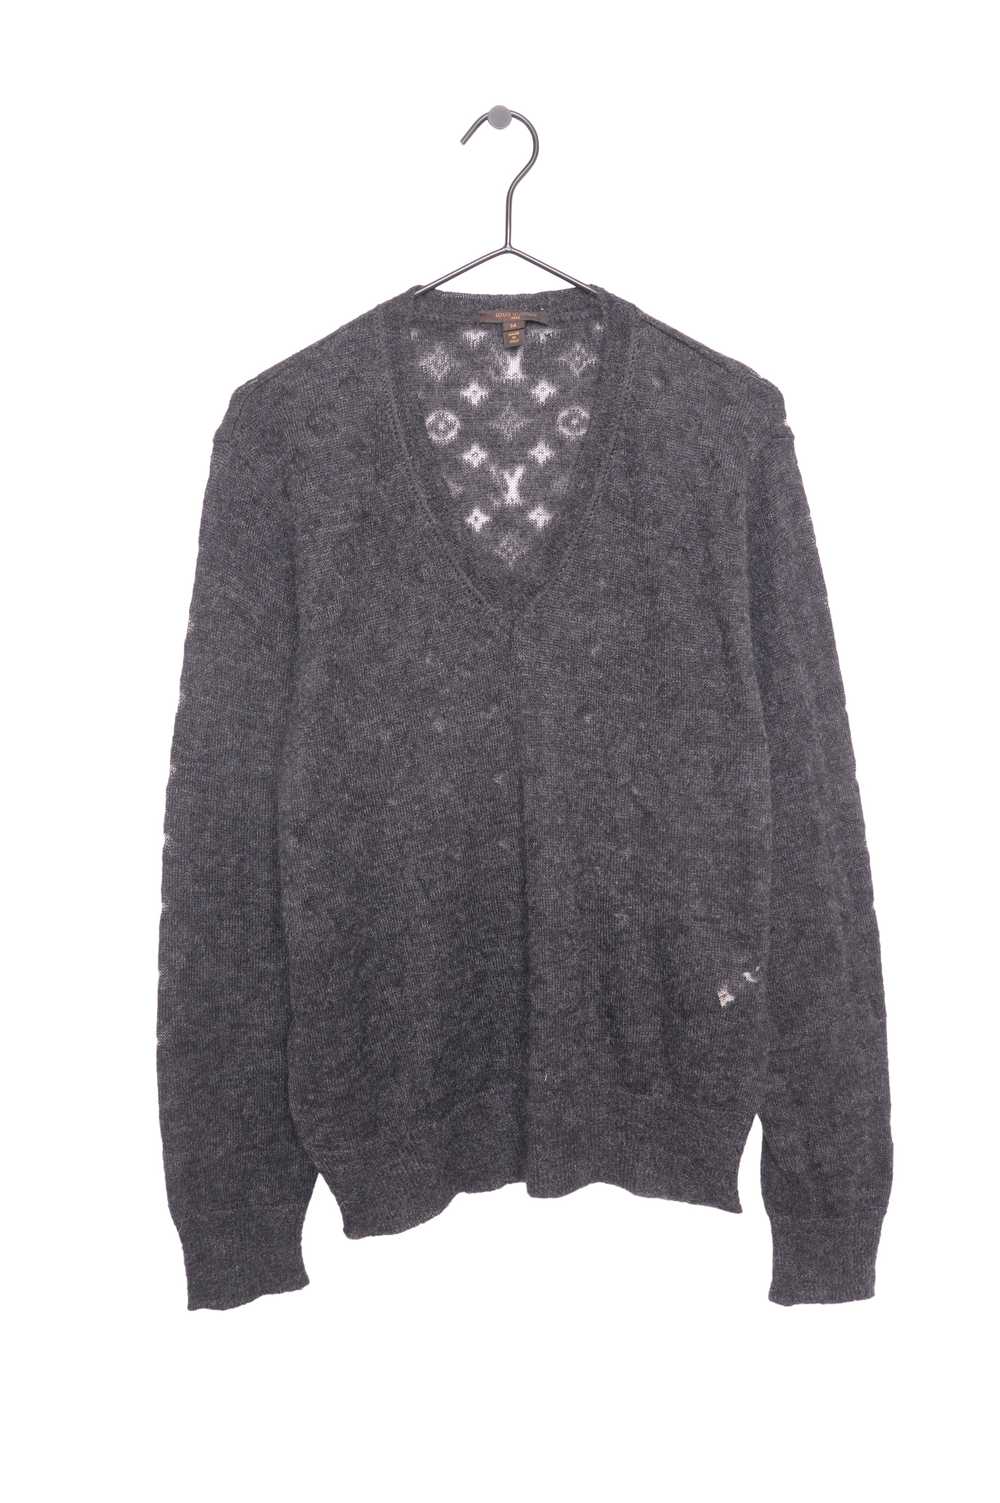 Louis Vuitton Open Knit Mohair Sweater - image 1